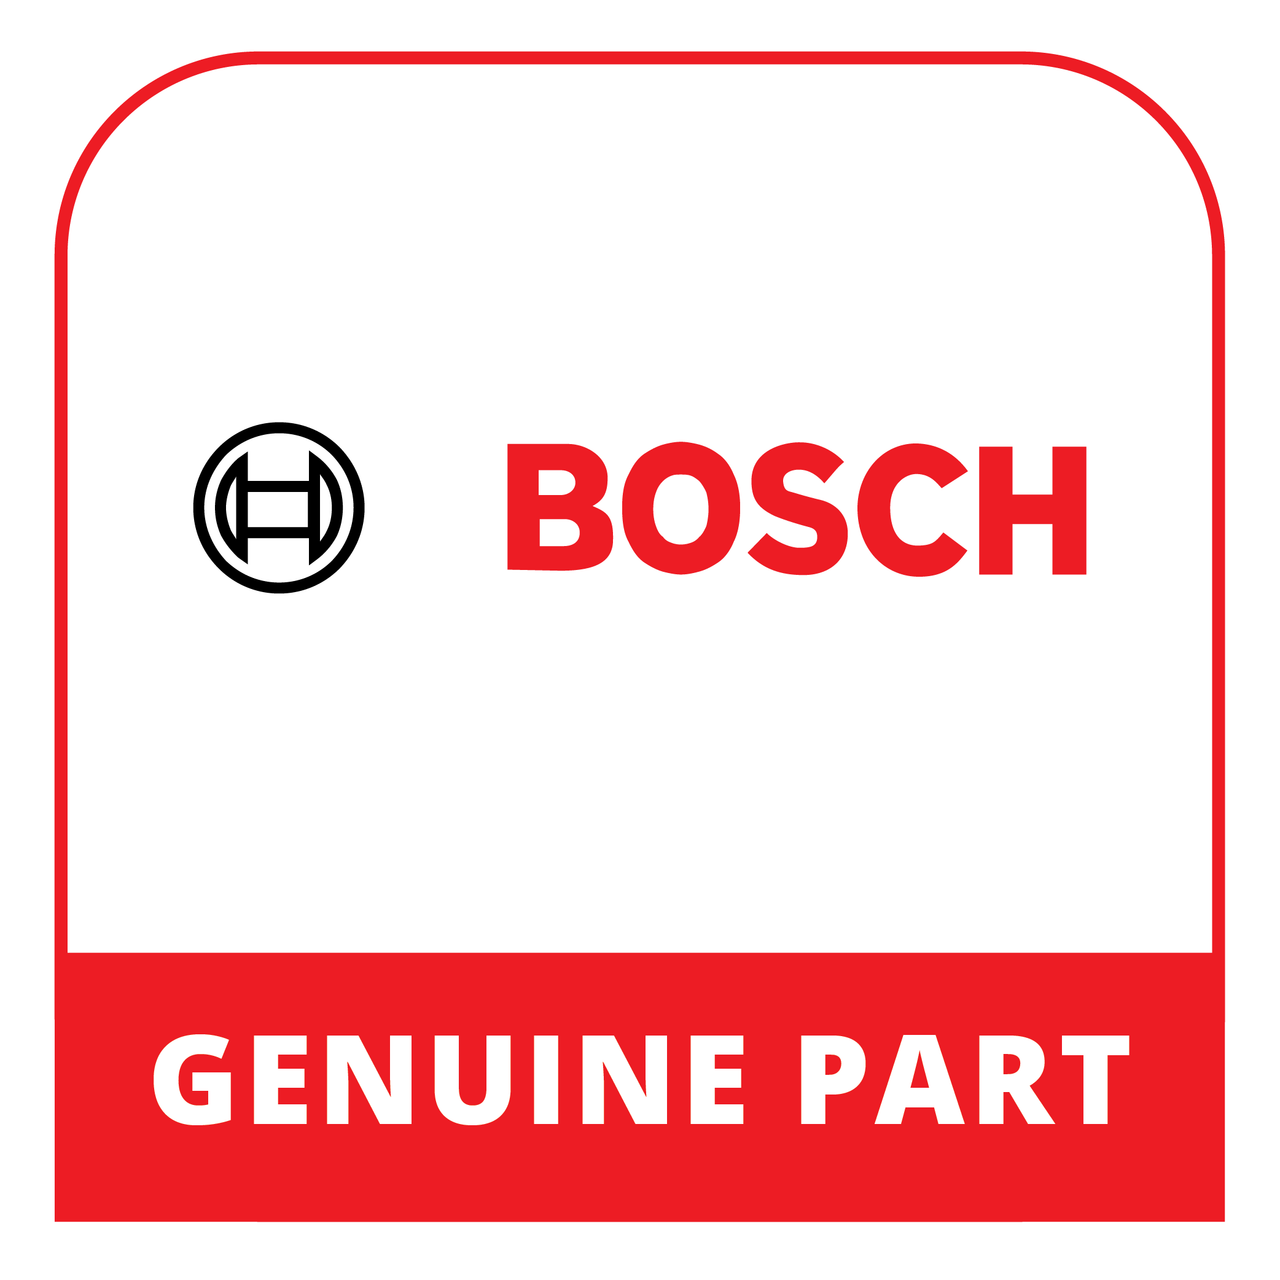 Bosch 00166857 - Capillary Tube - Genuine Bosch (Thermador) Part